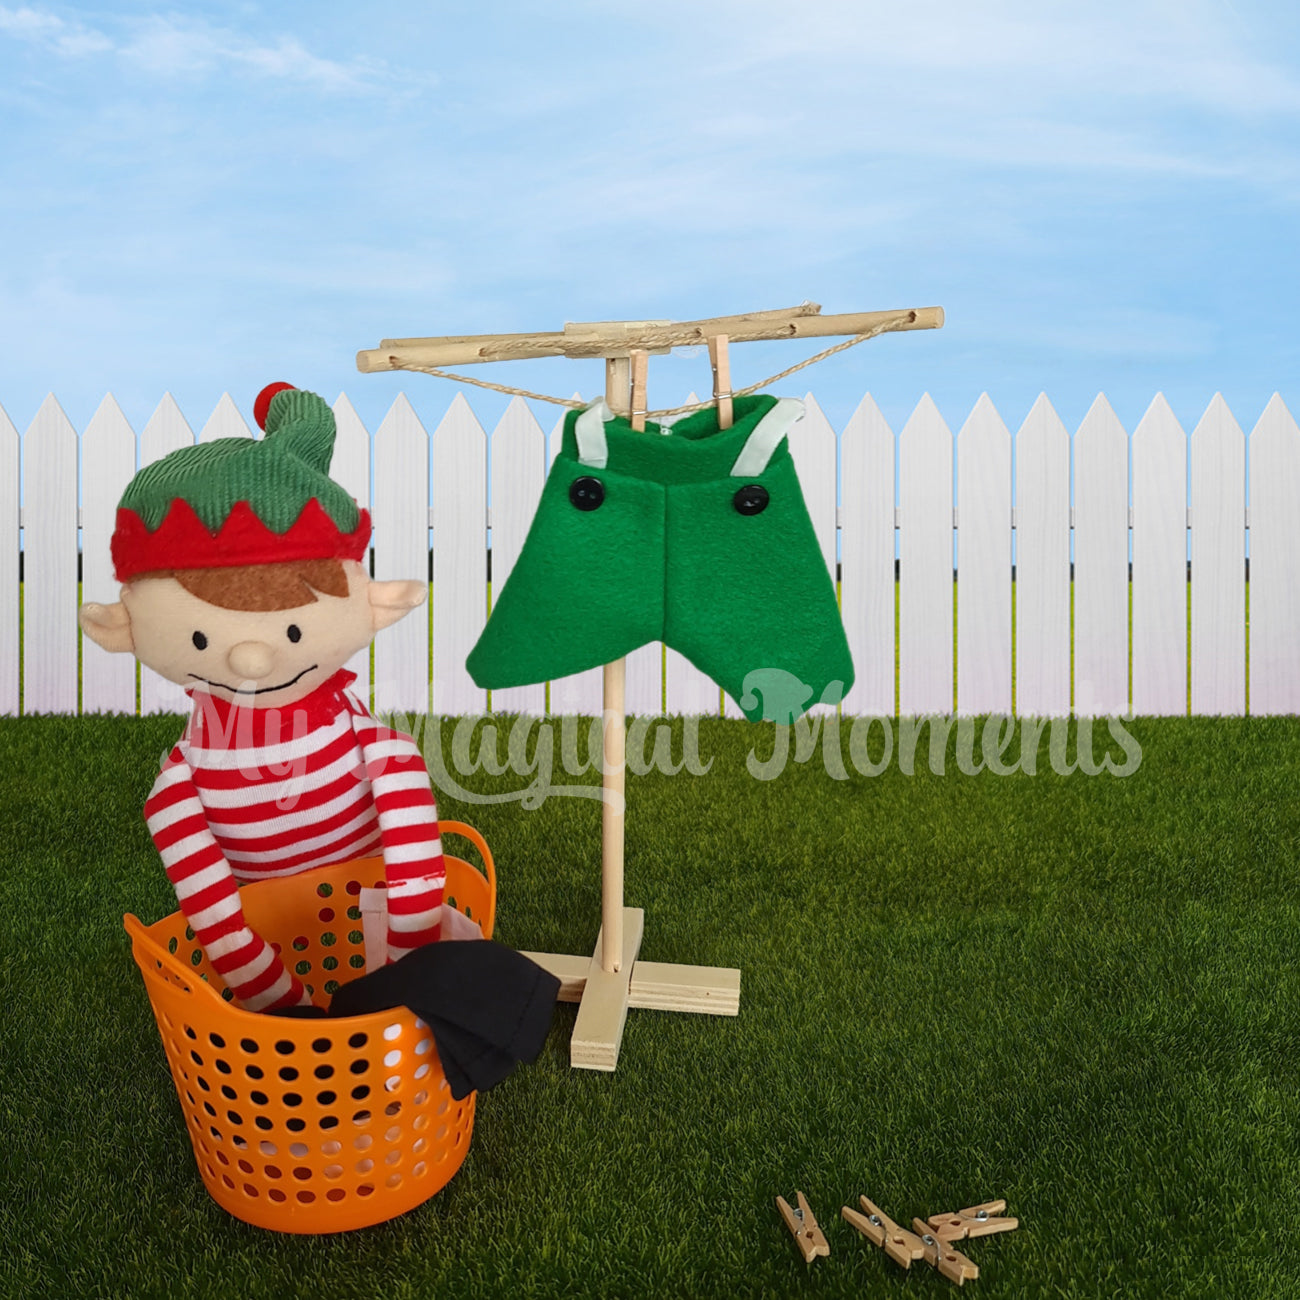 Elf for Christmas doing laundry